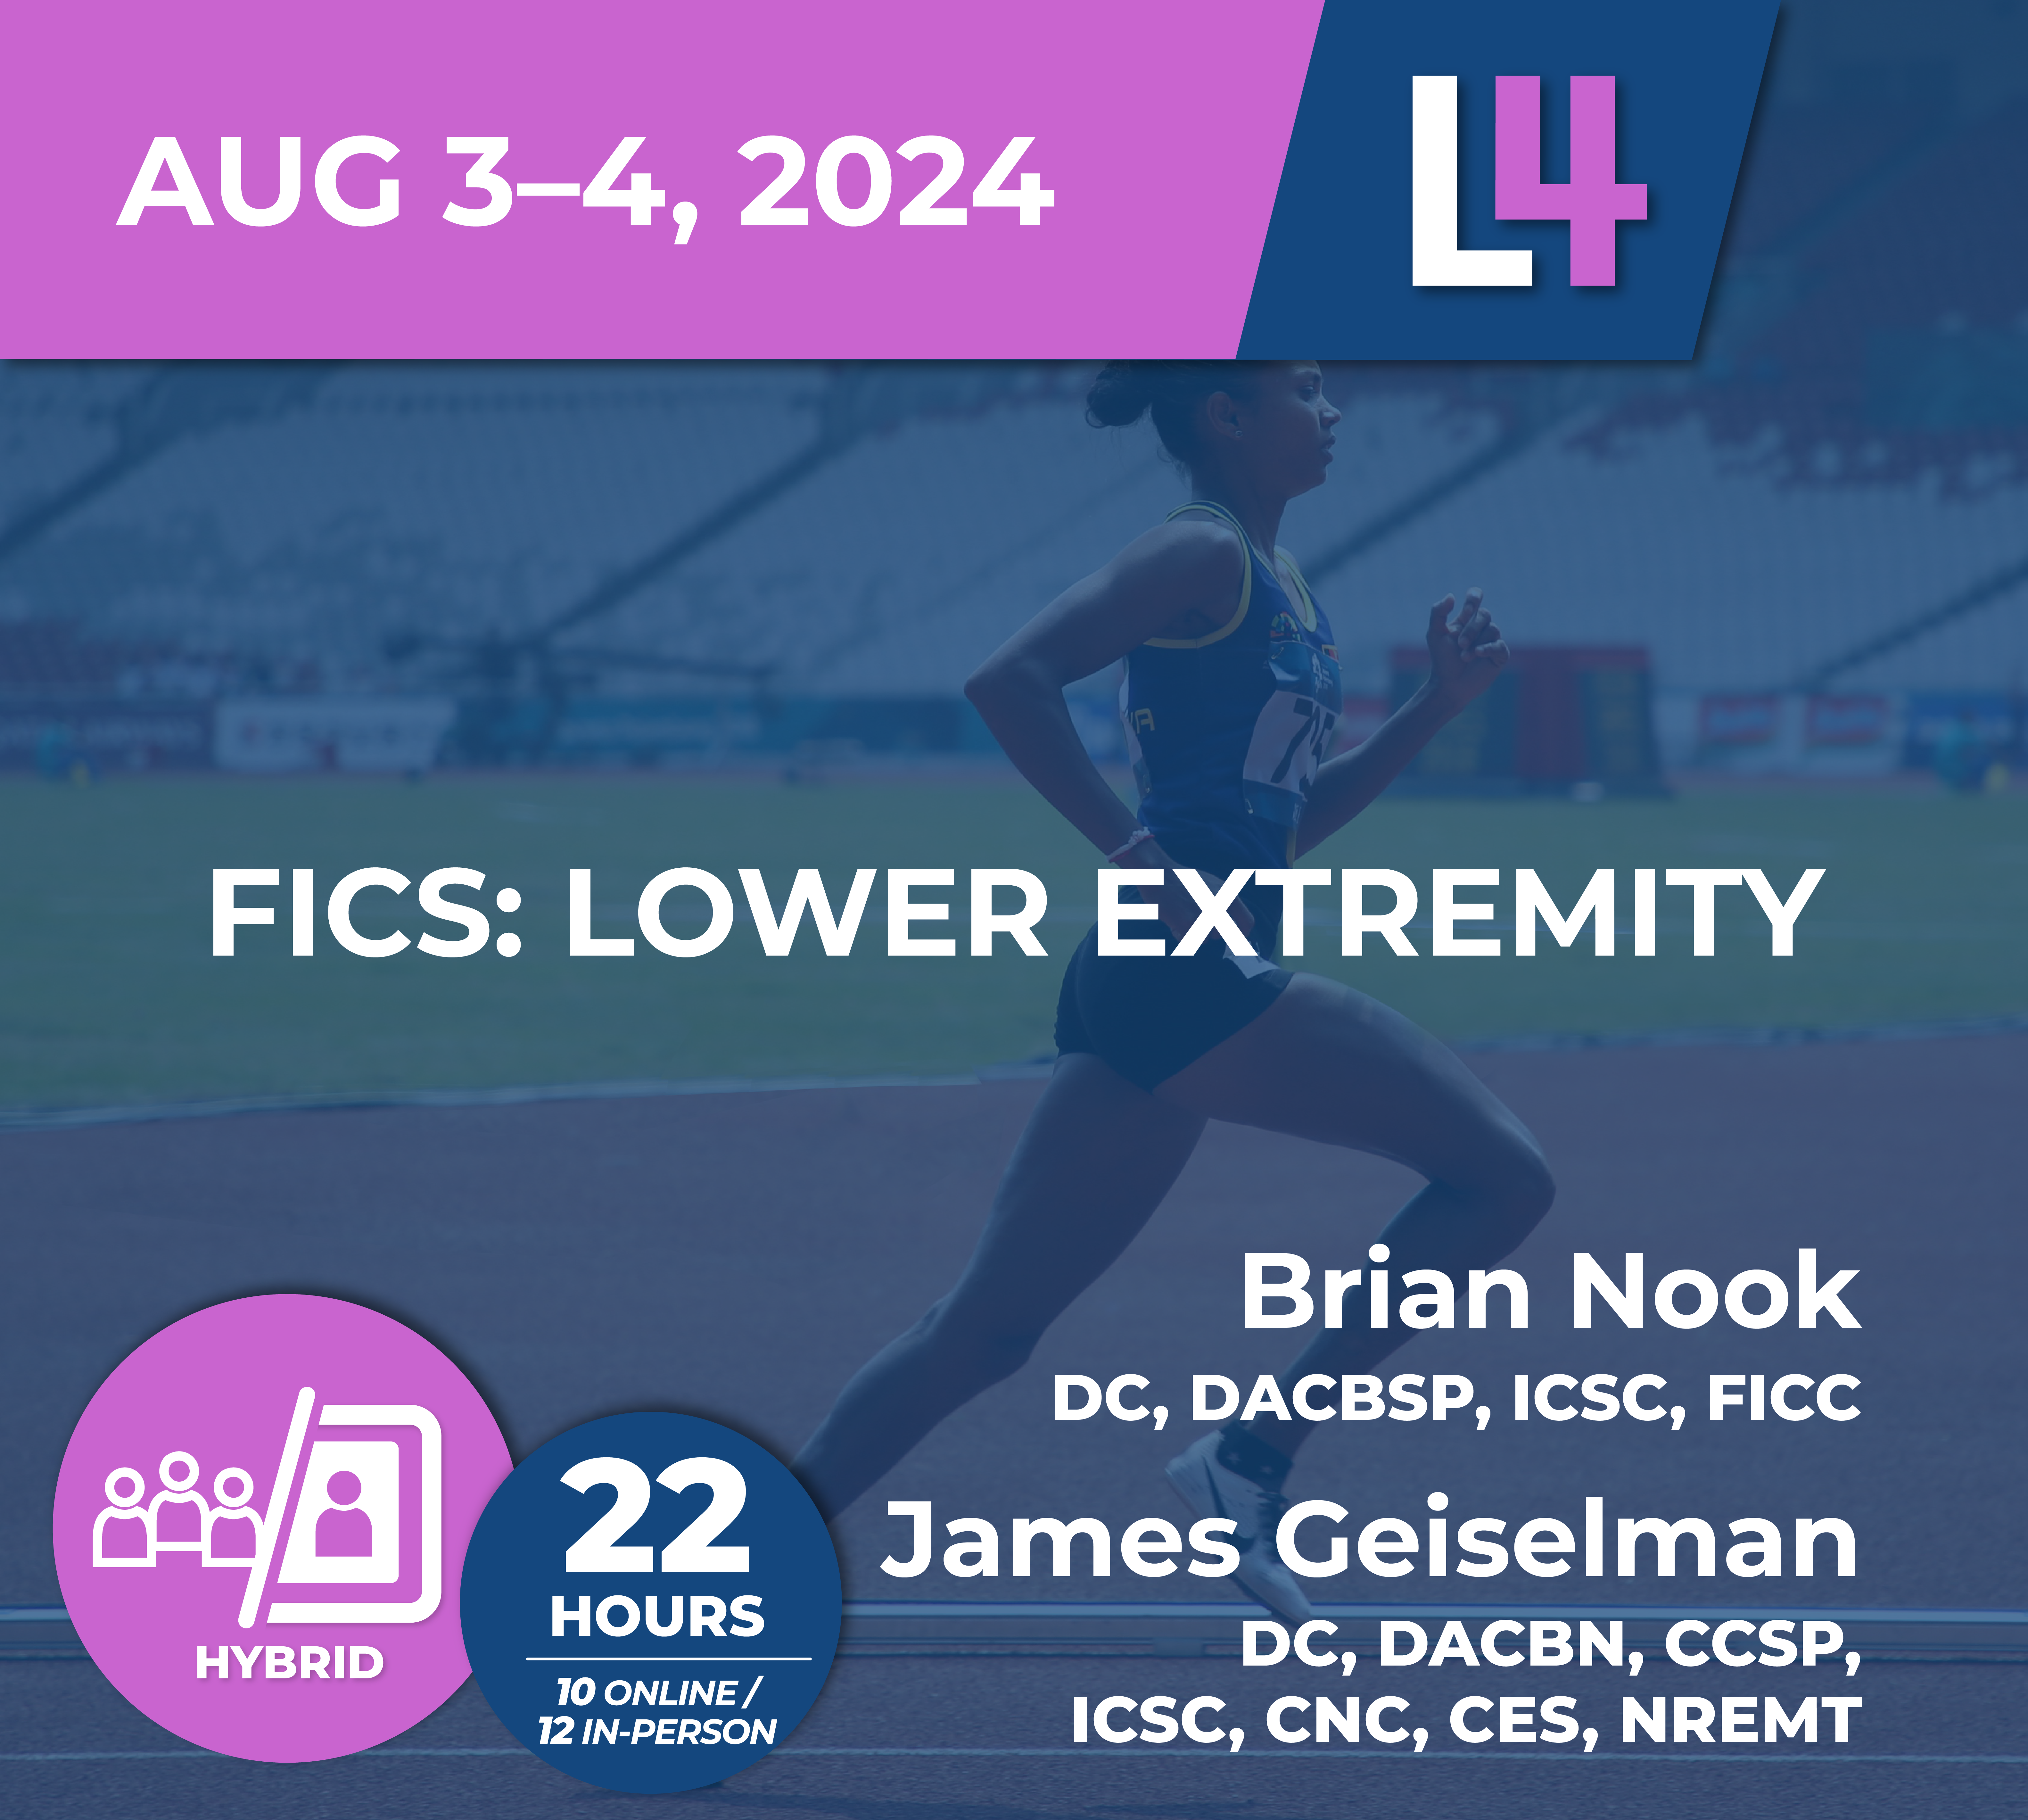 FICS: Lower Extremity Seminar